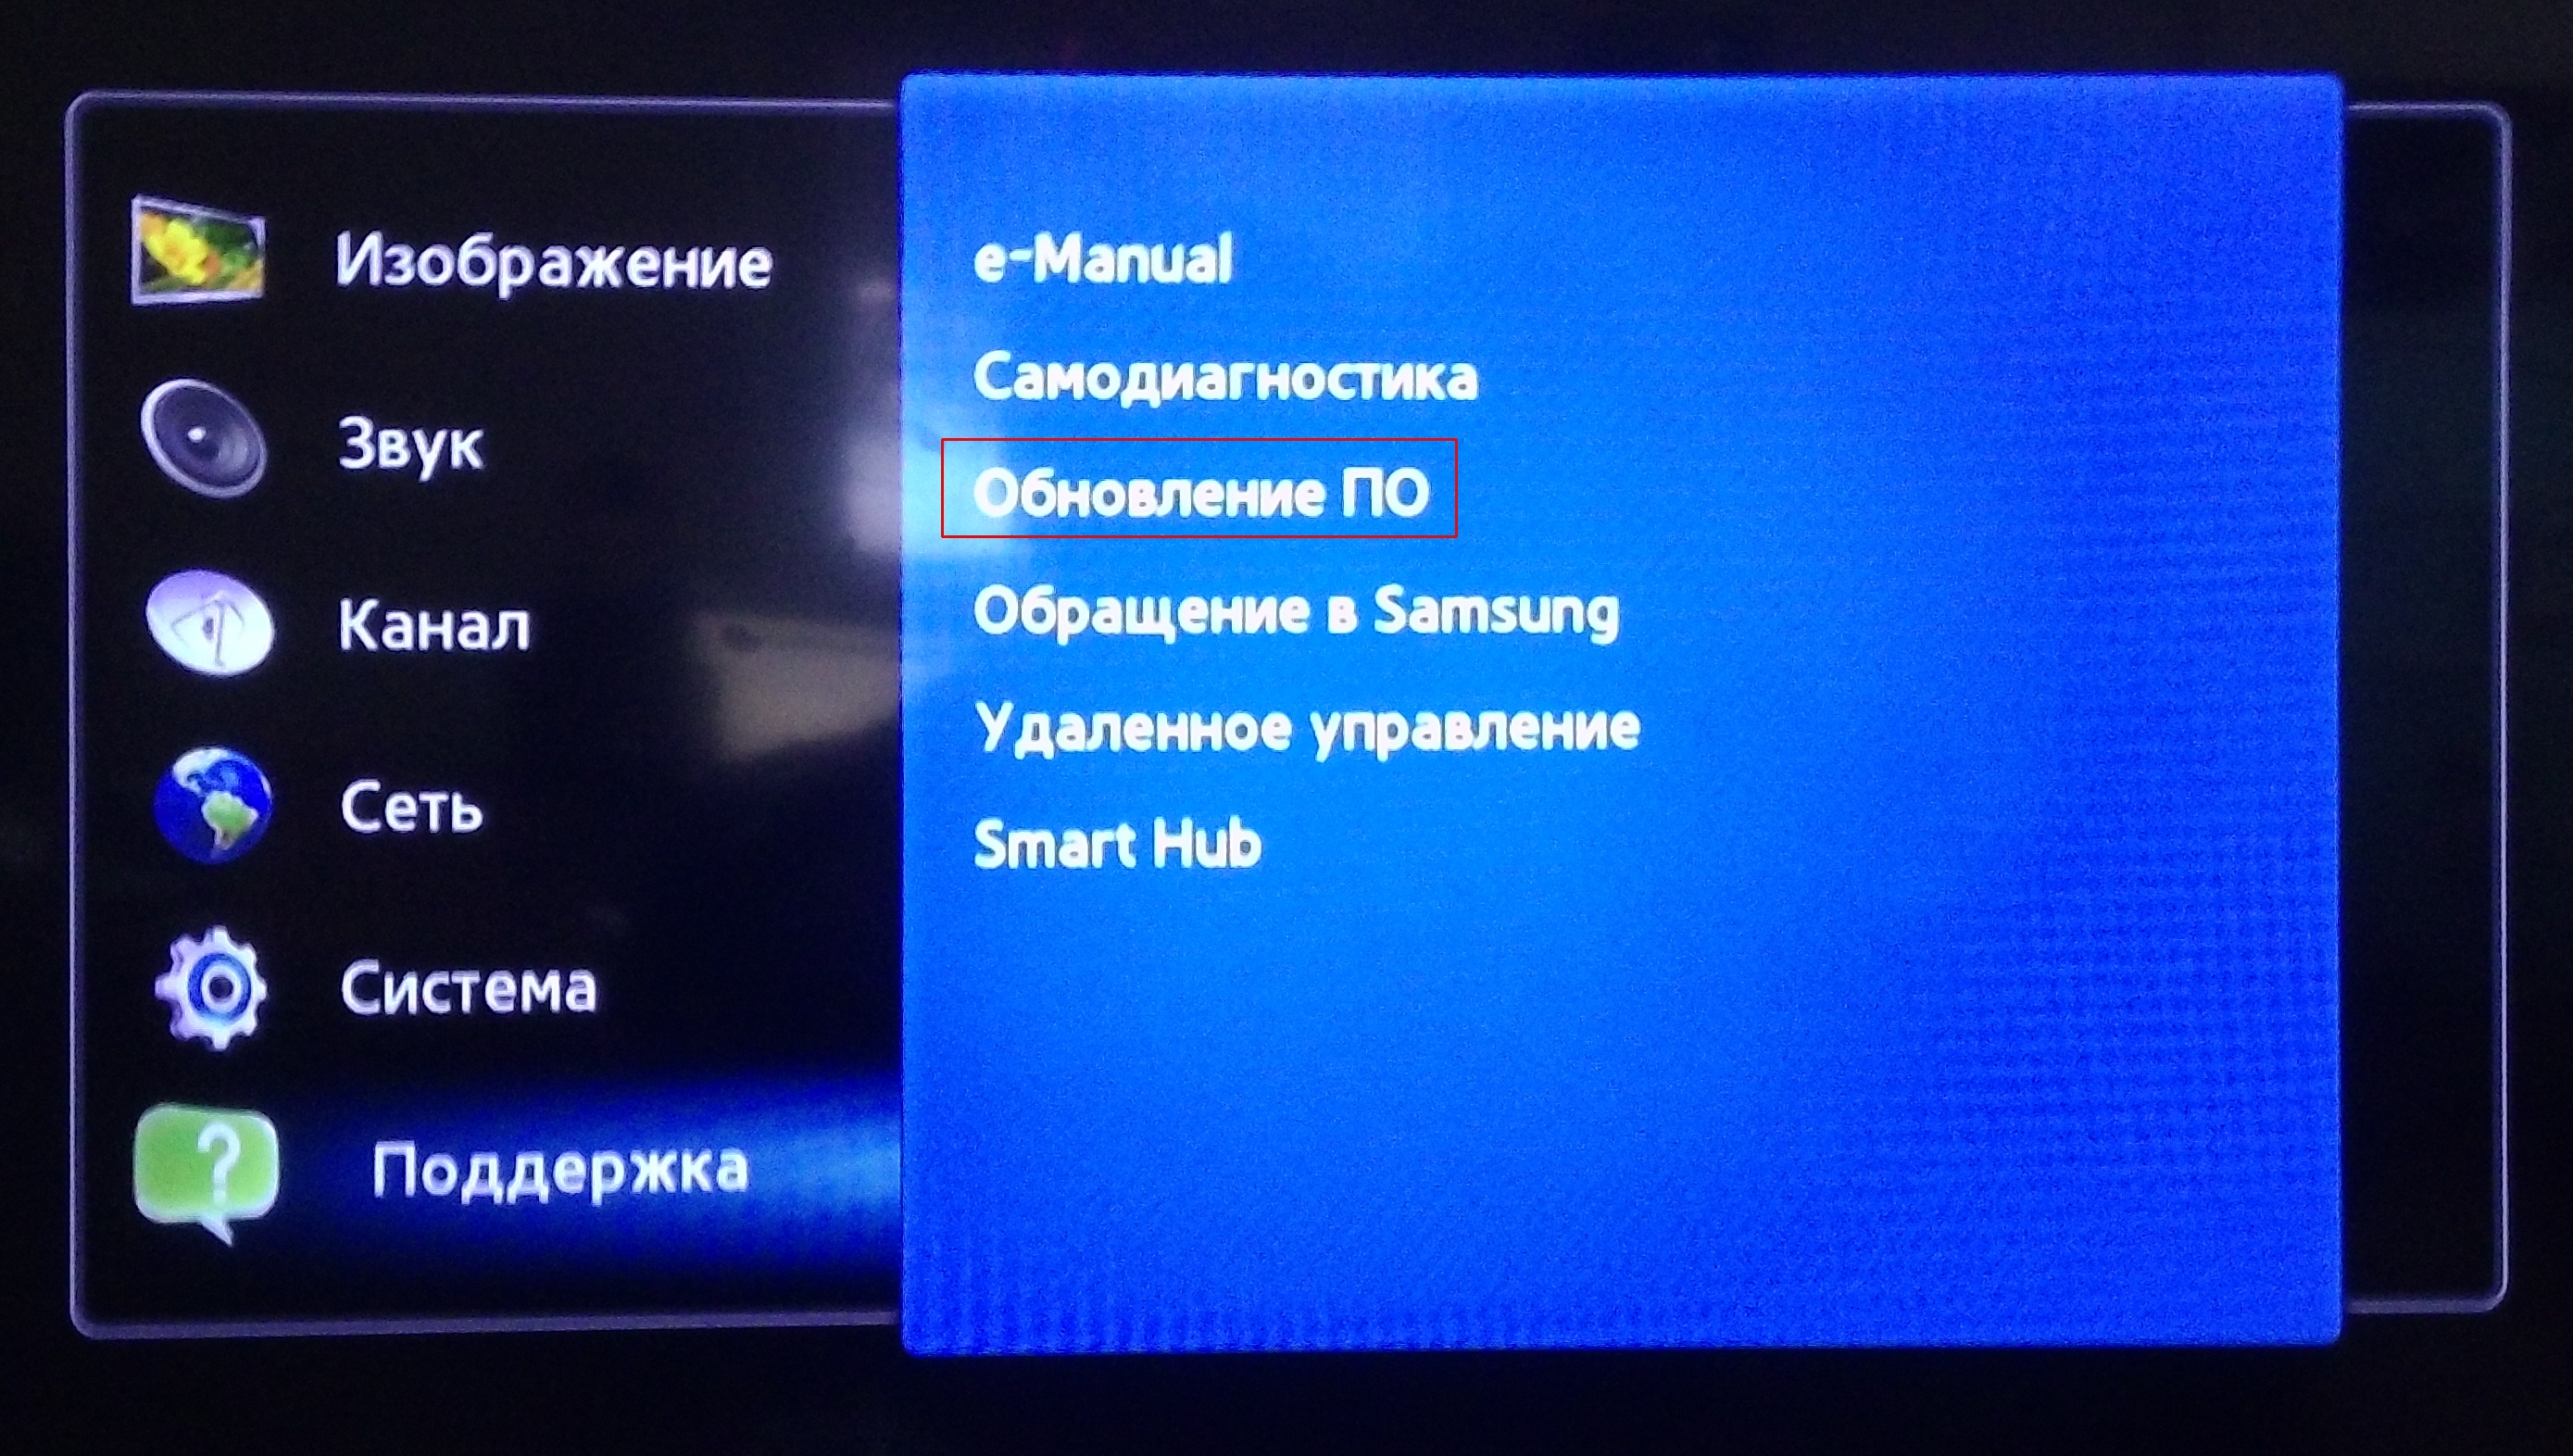 Manual Tv Samsung